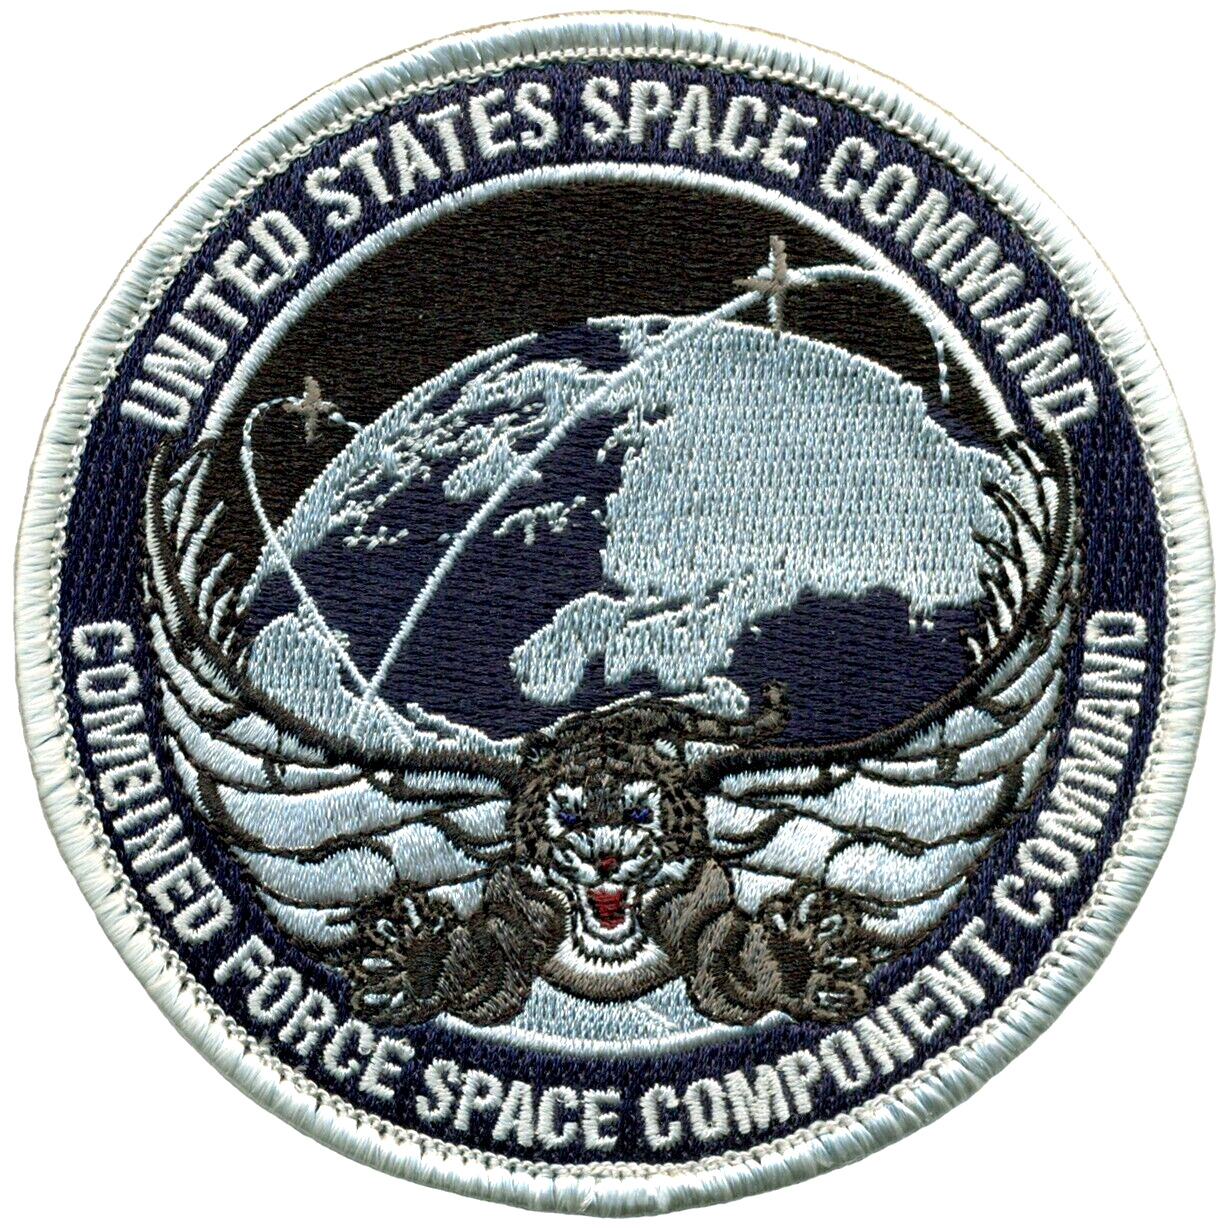 UNITED STATES SPACE COMMAND-USSPACECOM -CFSCC- DELTA 5-Vandenberg SFB-USSF PATCH